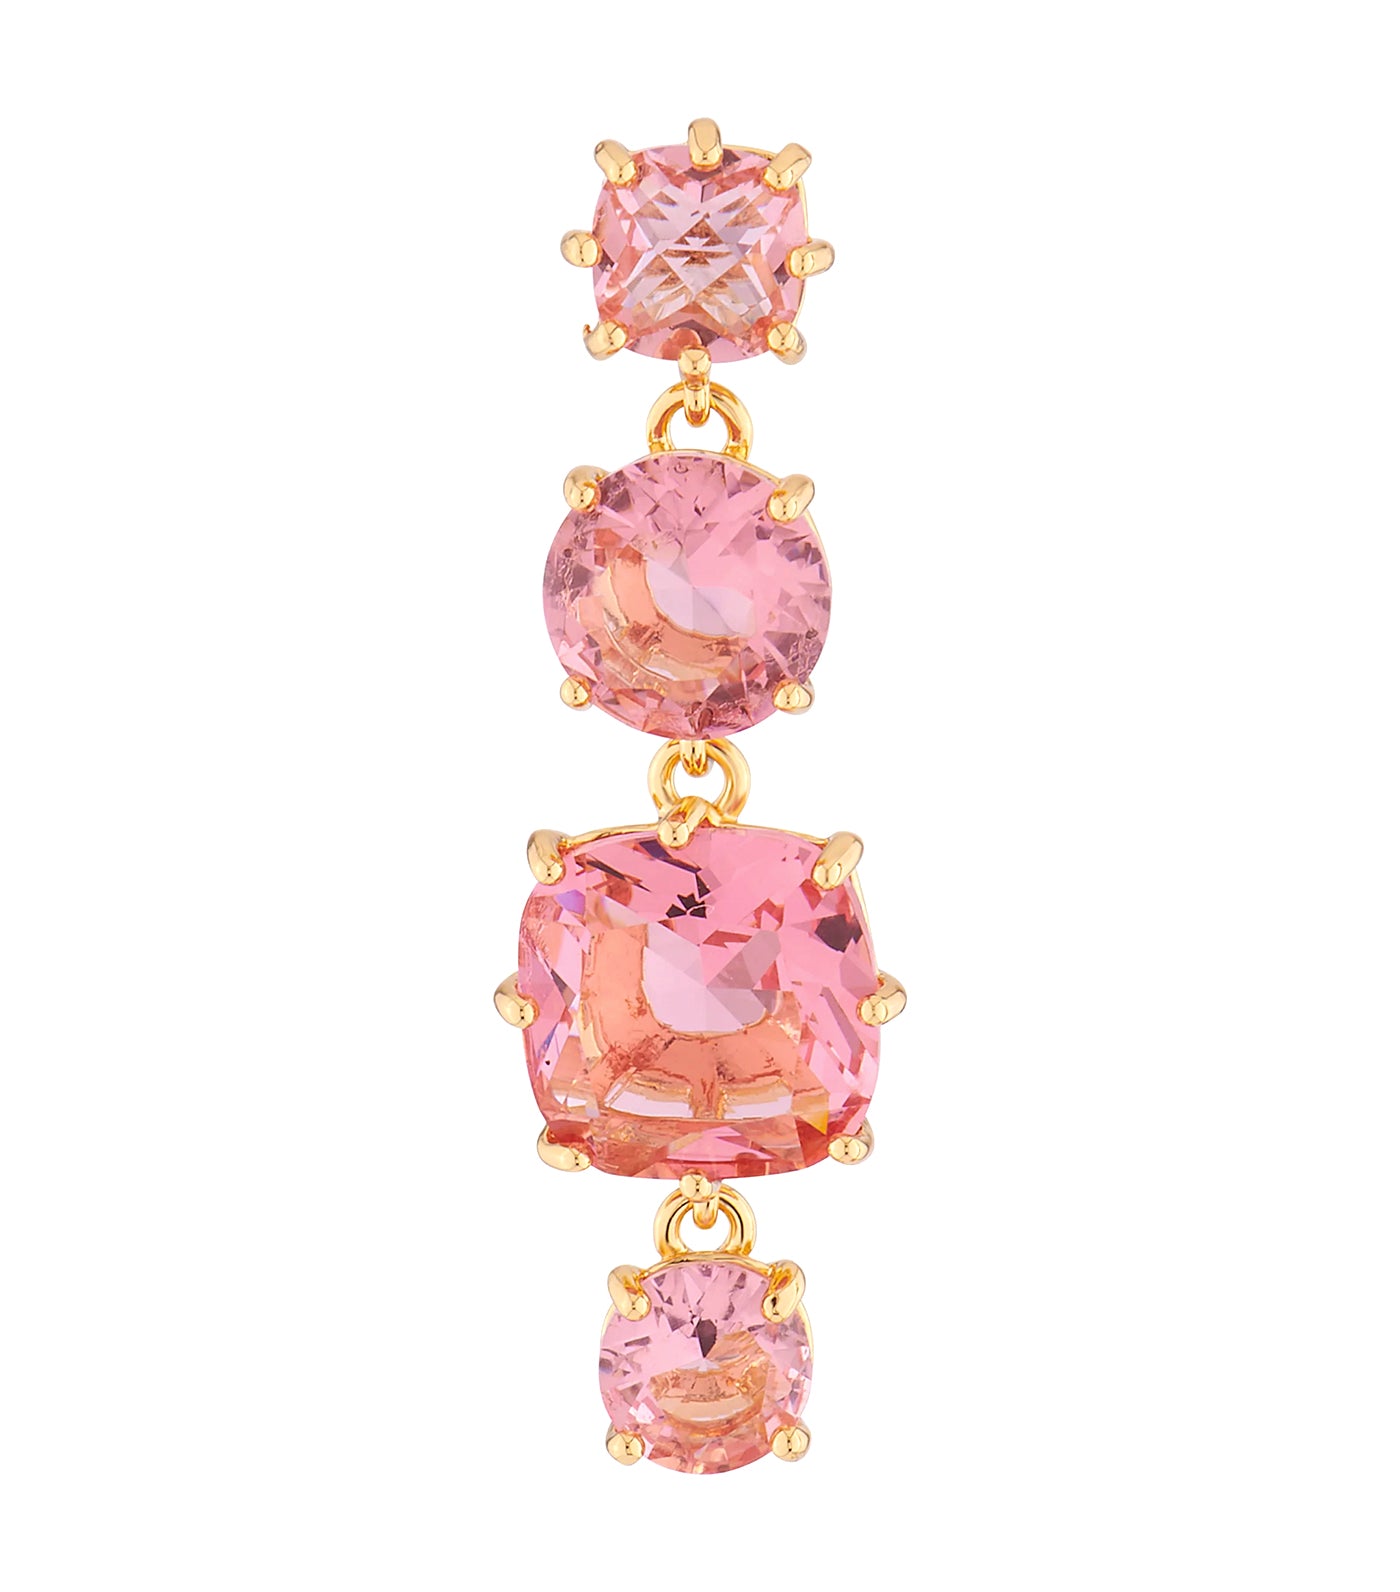 La Diamantine 4 Stones Stud Earrings Pink Peach